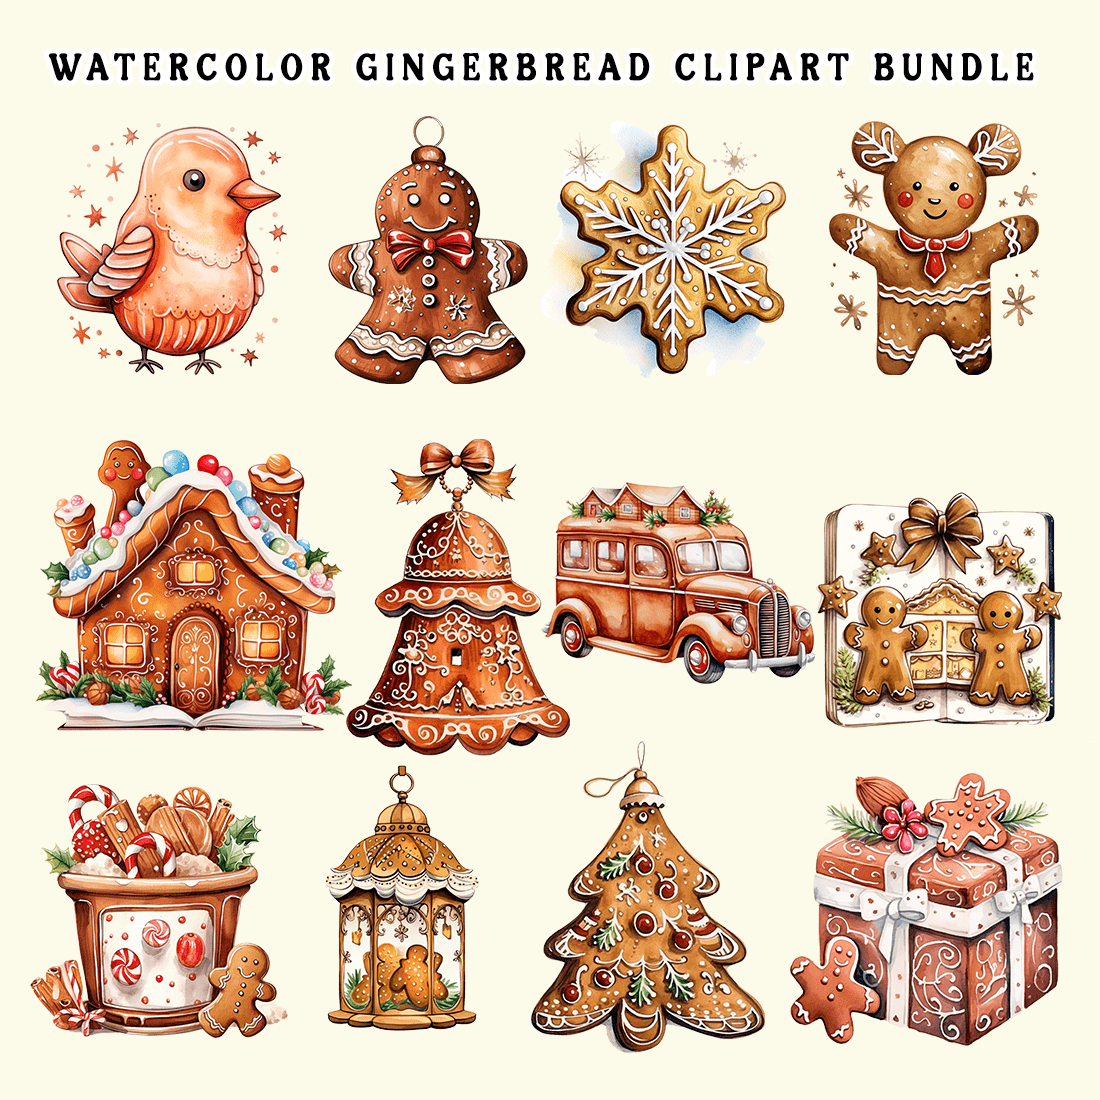 Watercolor Gingerbread Clipart Bundle preview image.